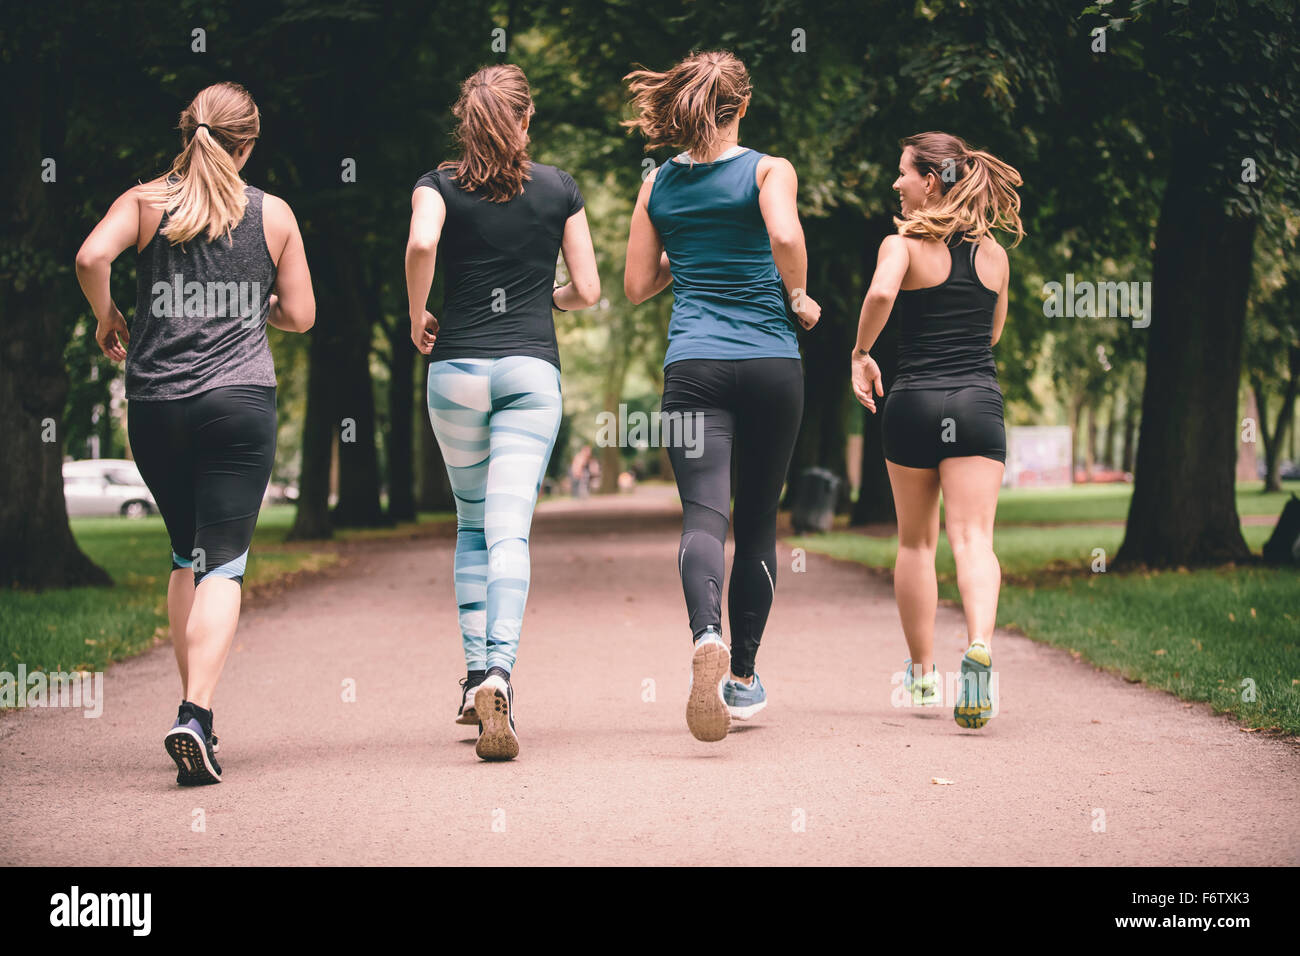 Four women jogging in park Stock Photo